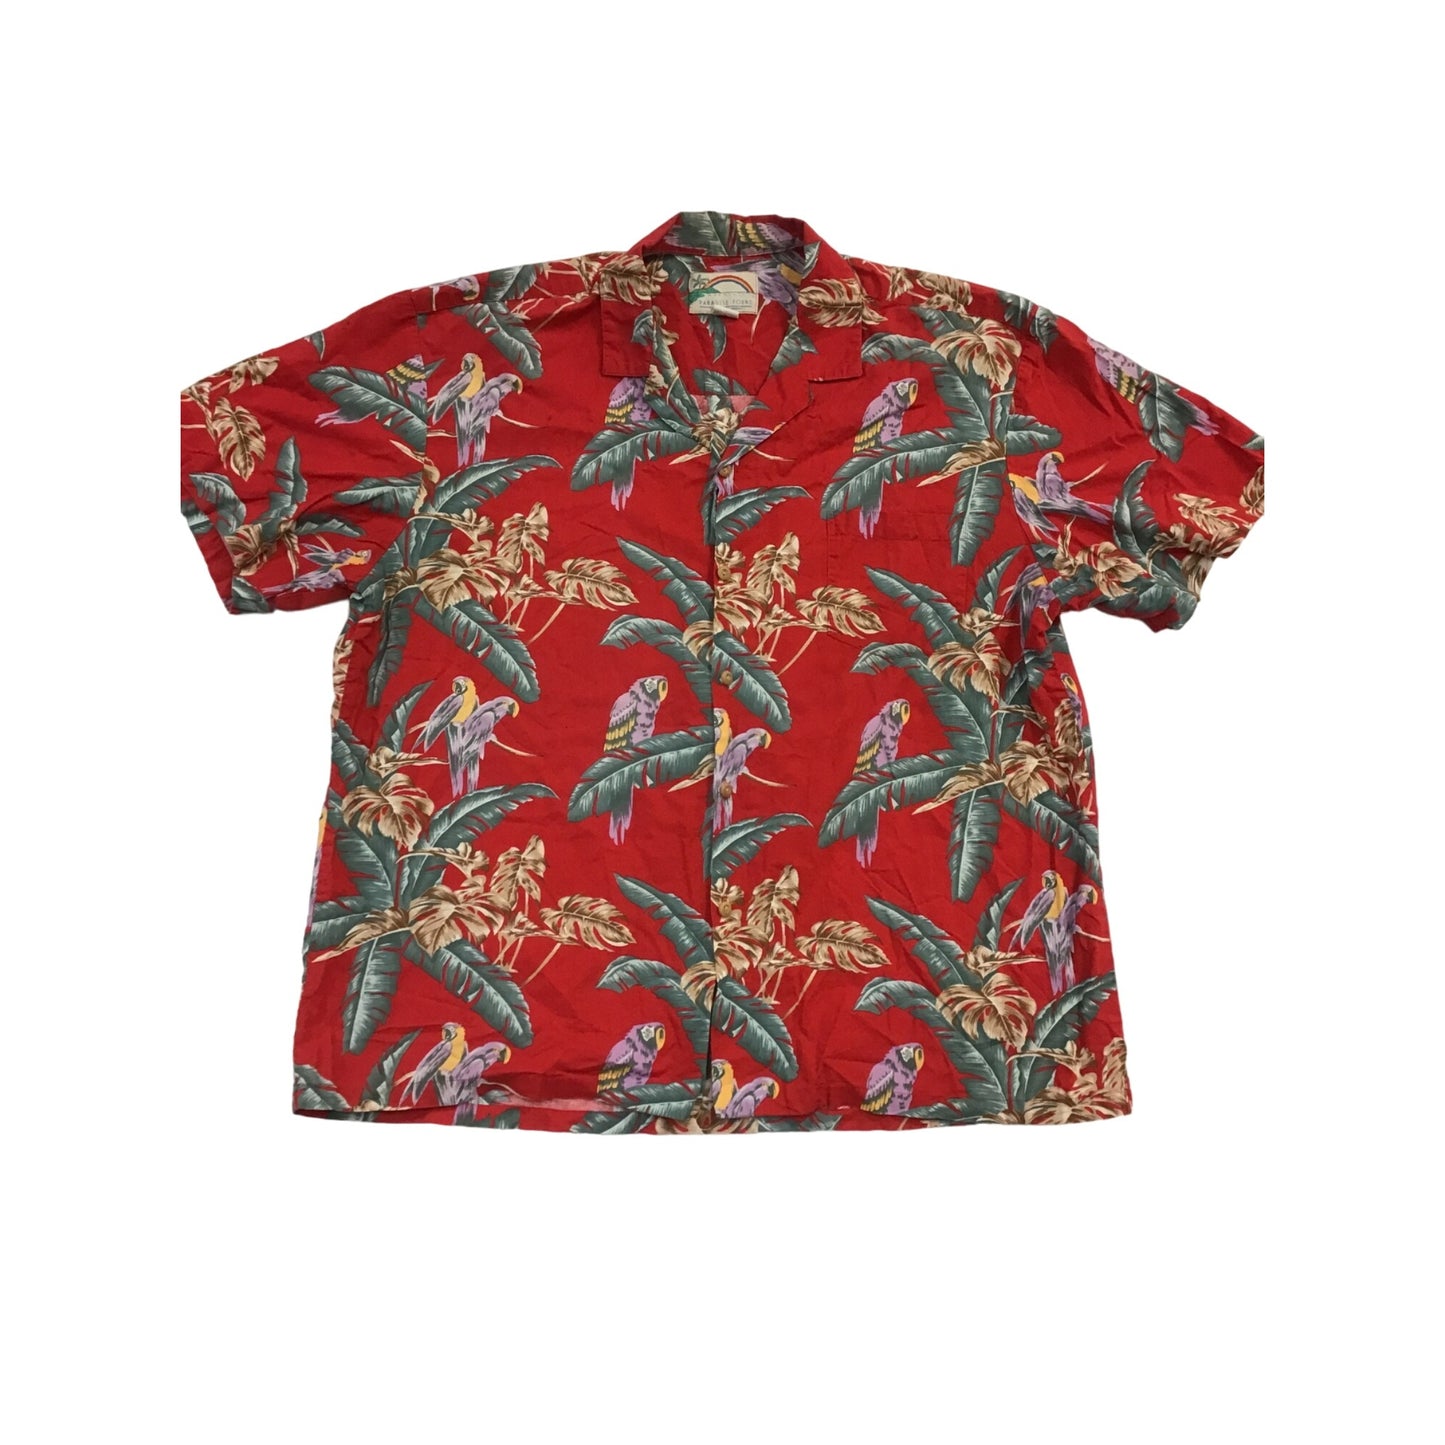 Mens Hawaiian shirt